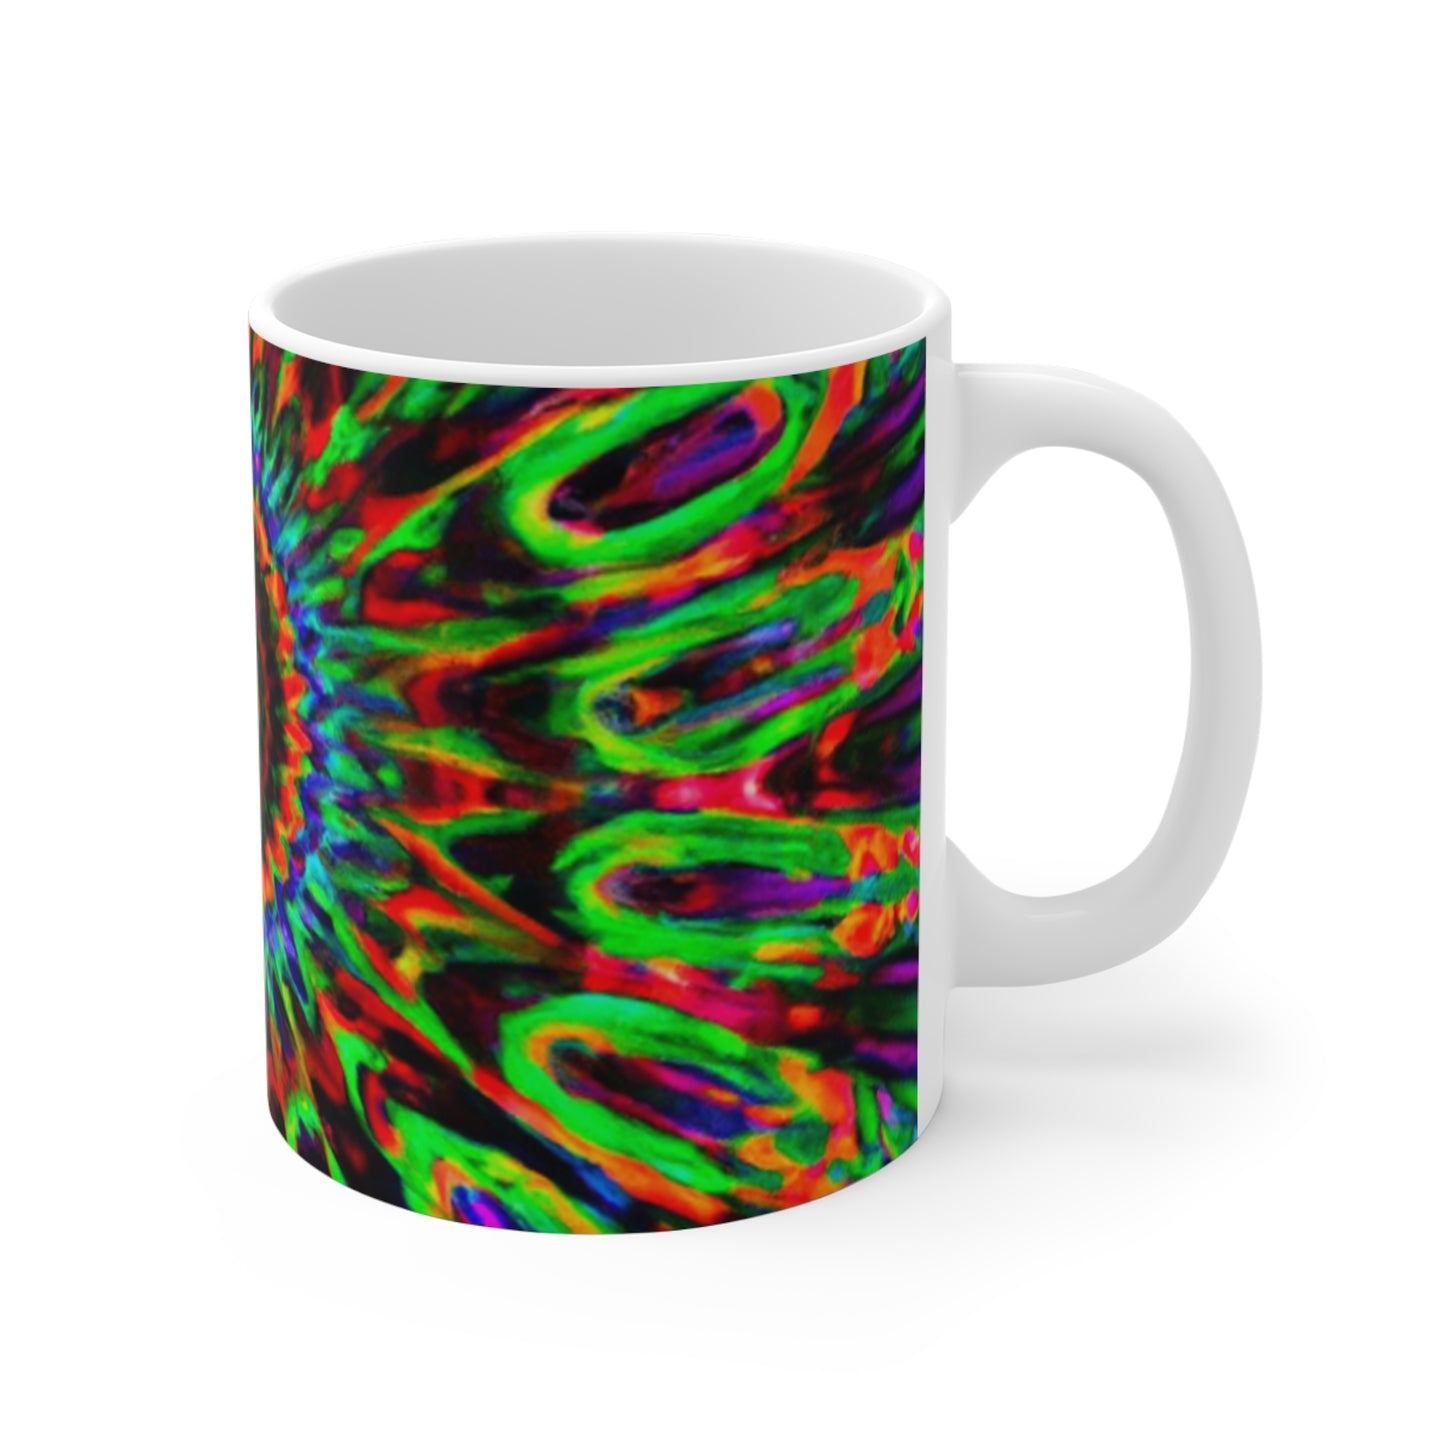 name

Java Joe - Psychedelic Coffee Cup Mug 11 Ounce